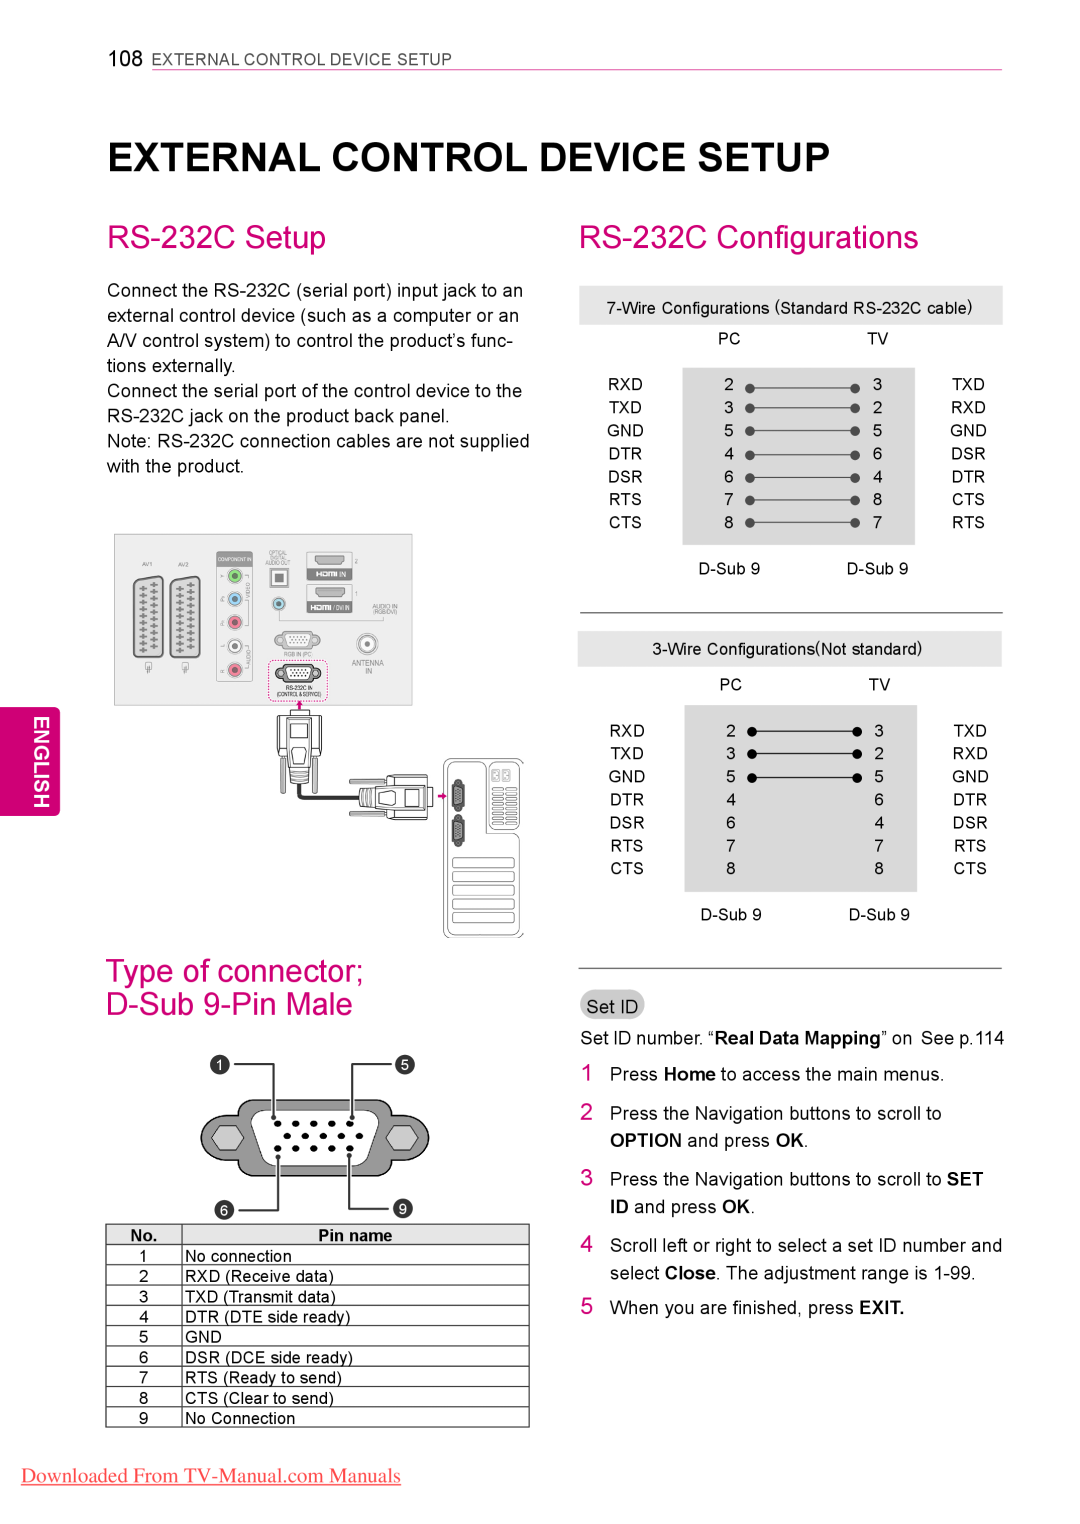 LG Electronics 42/50PT45** External Control Device Setup, RS-232C Setup, Type of connector D-Sub 9-Pin Male, English 